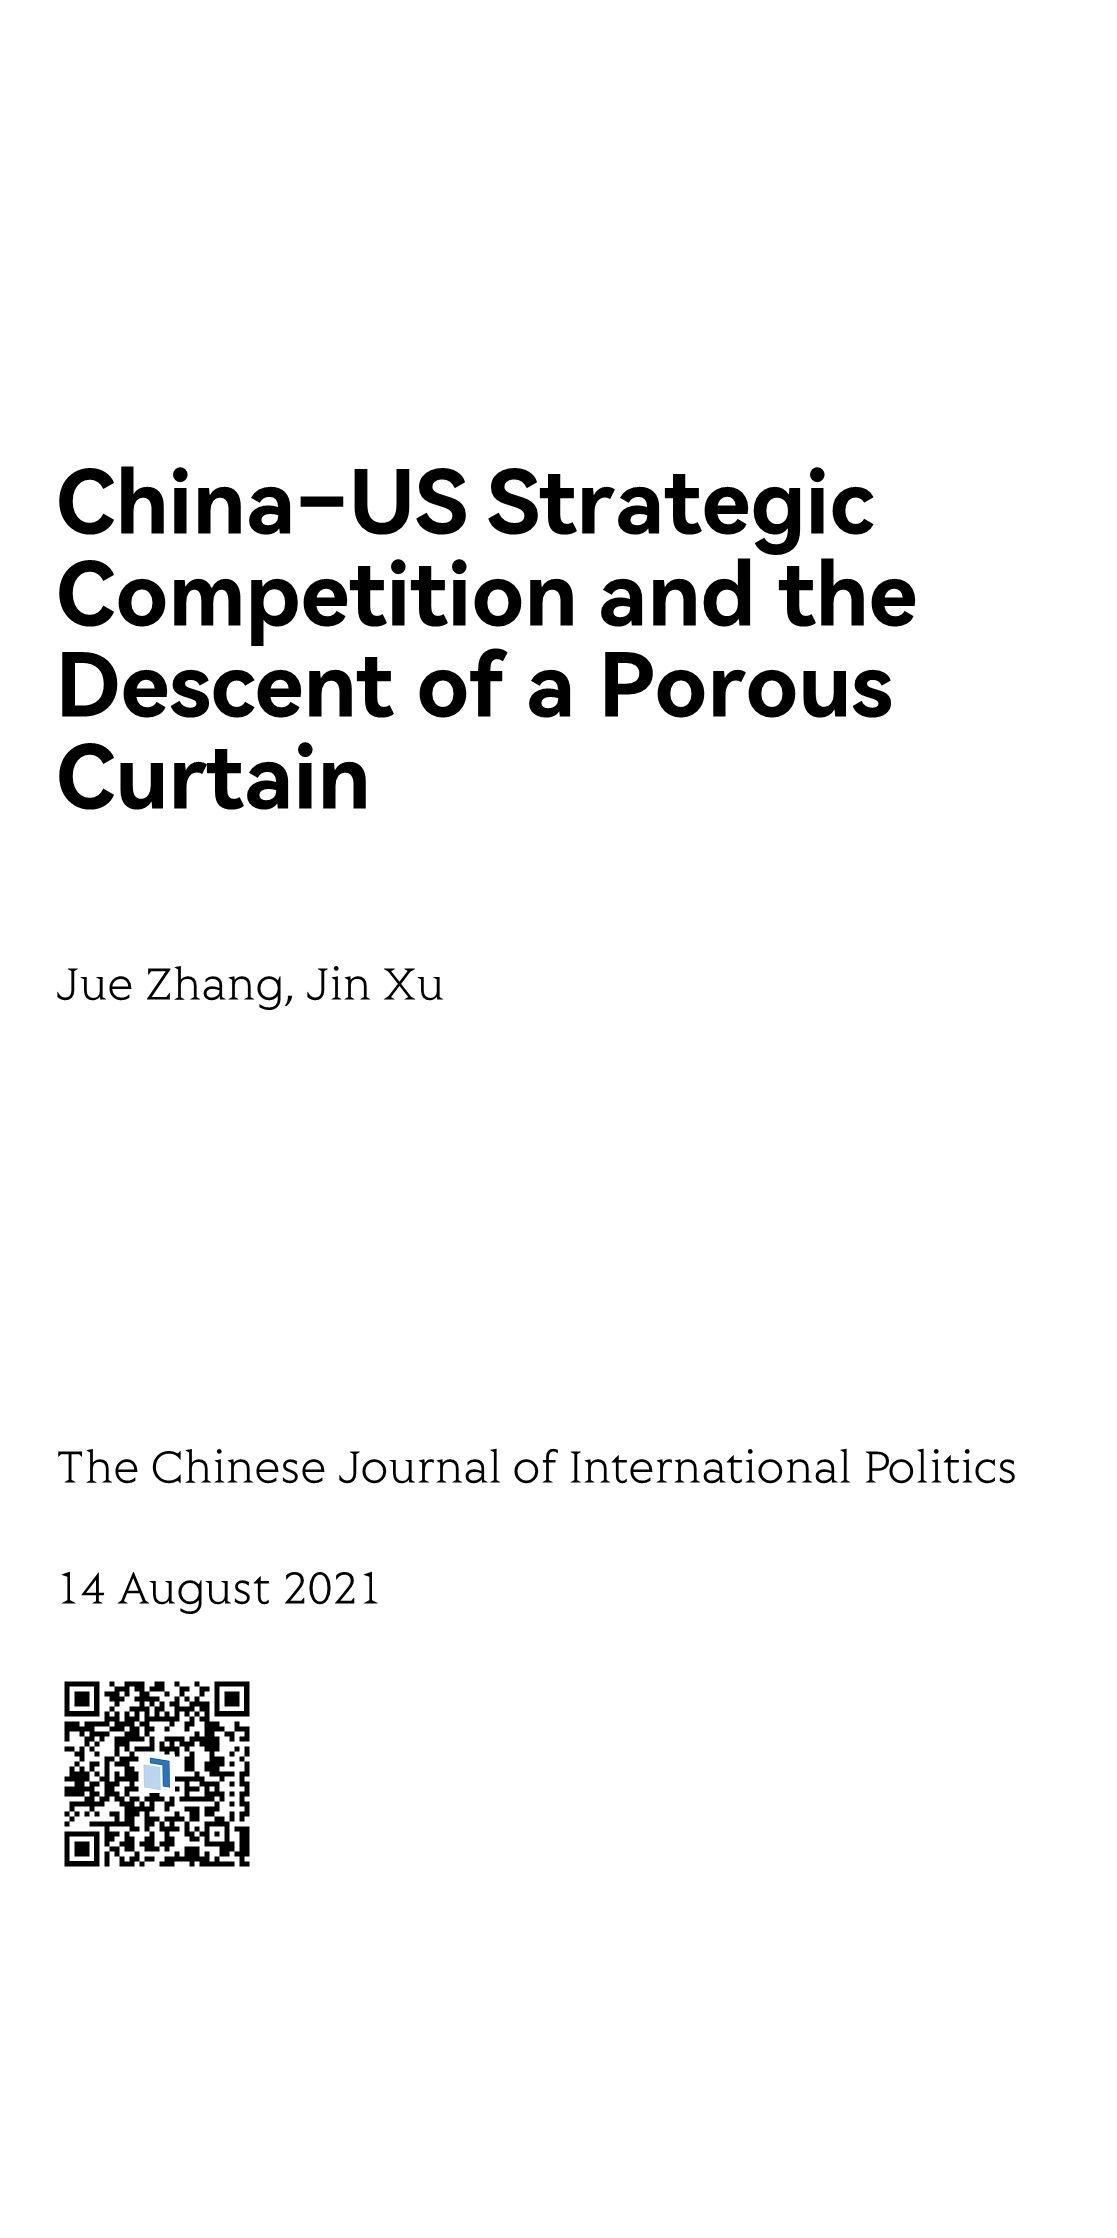 The Chinese Journal of International Politics_1